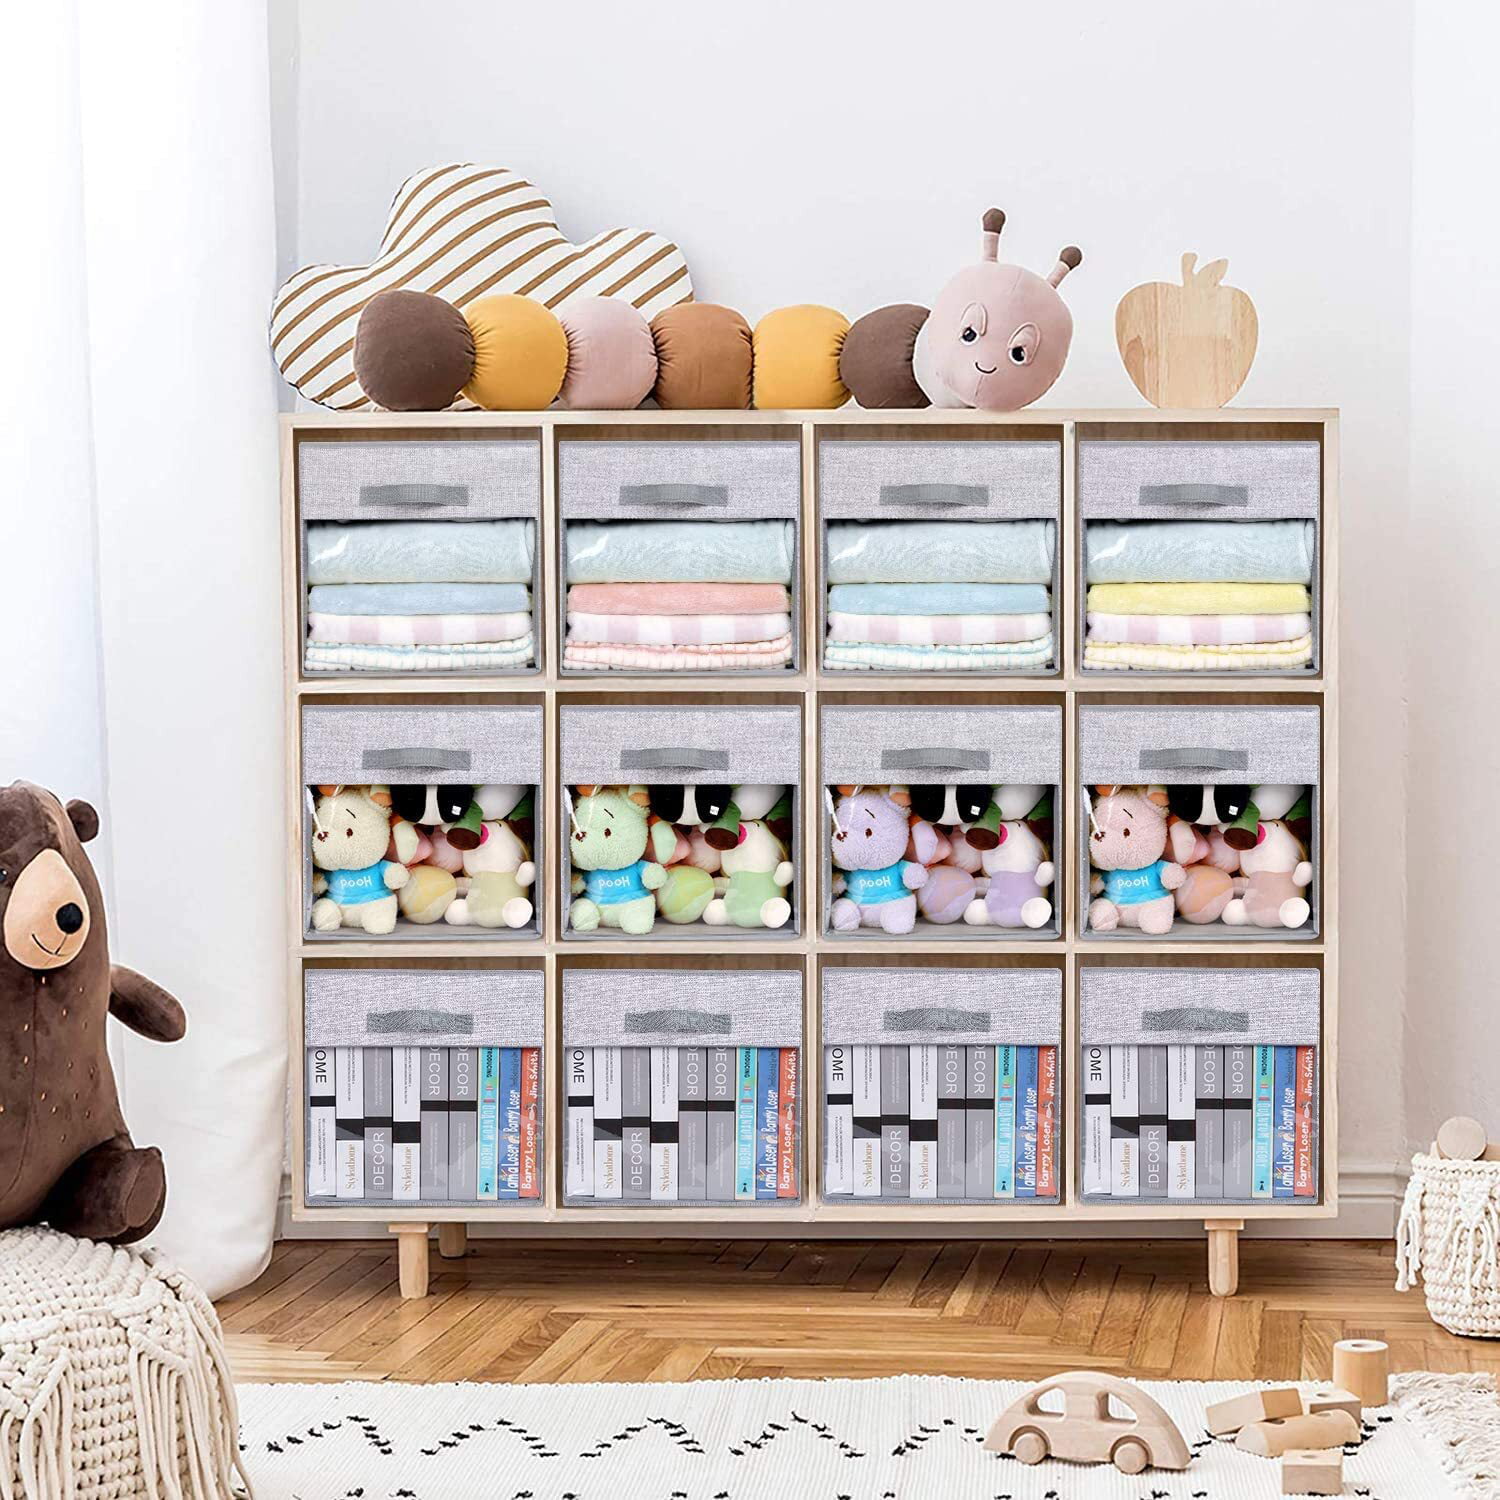 DECOMOMO Storage Bins | Cube Storage Bin with Label Holders, Fabric Storage  Cubes for Organizing Shelves Closet Toy Clothes (10.5 x 11 / 6pcs, Grey)